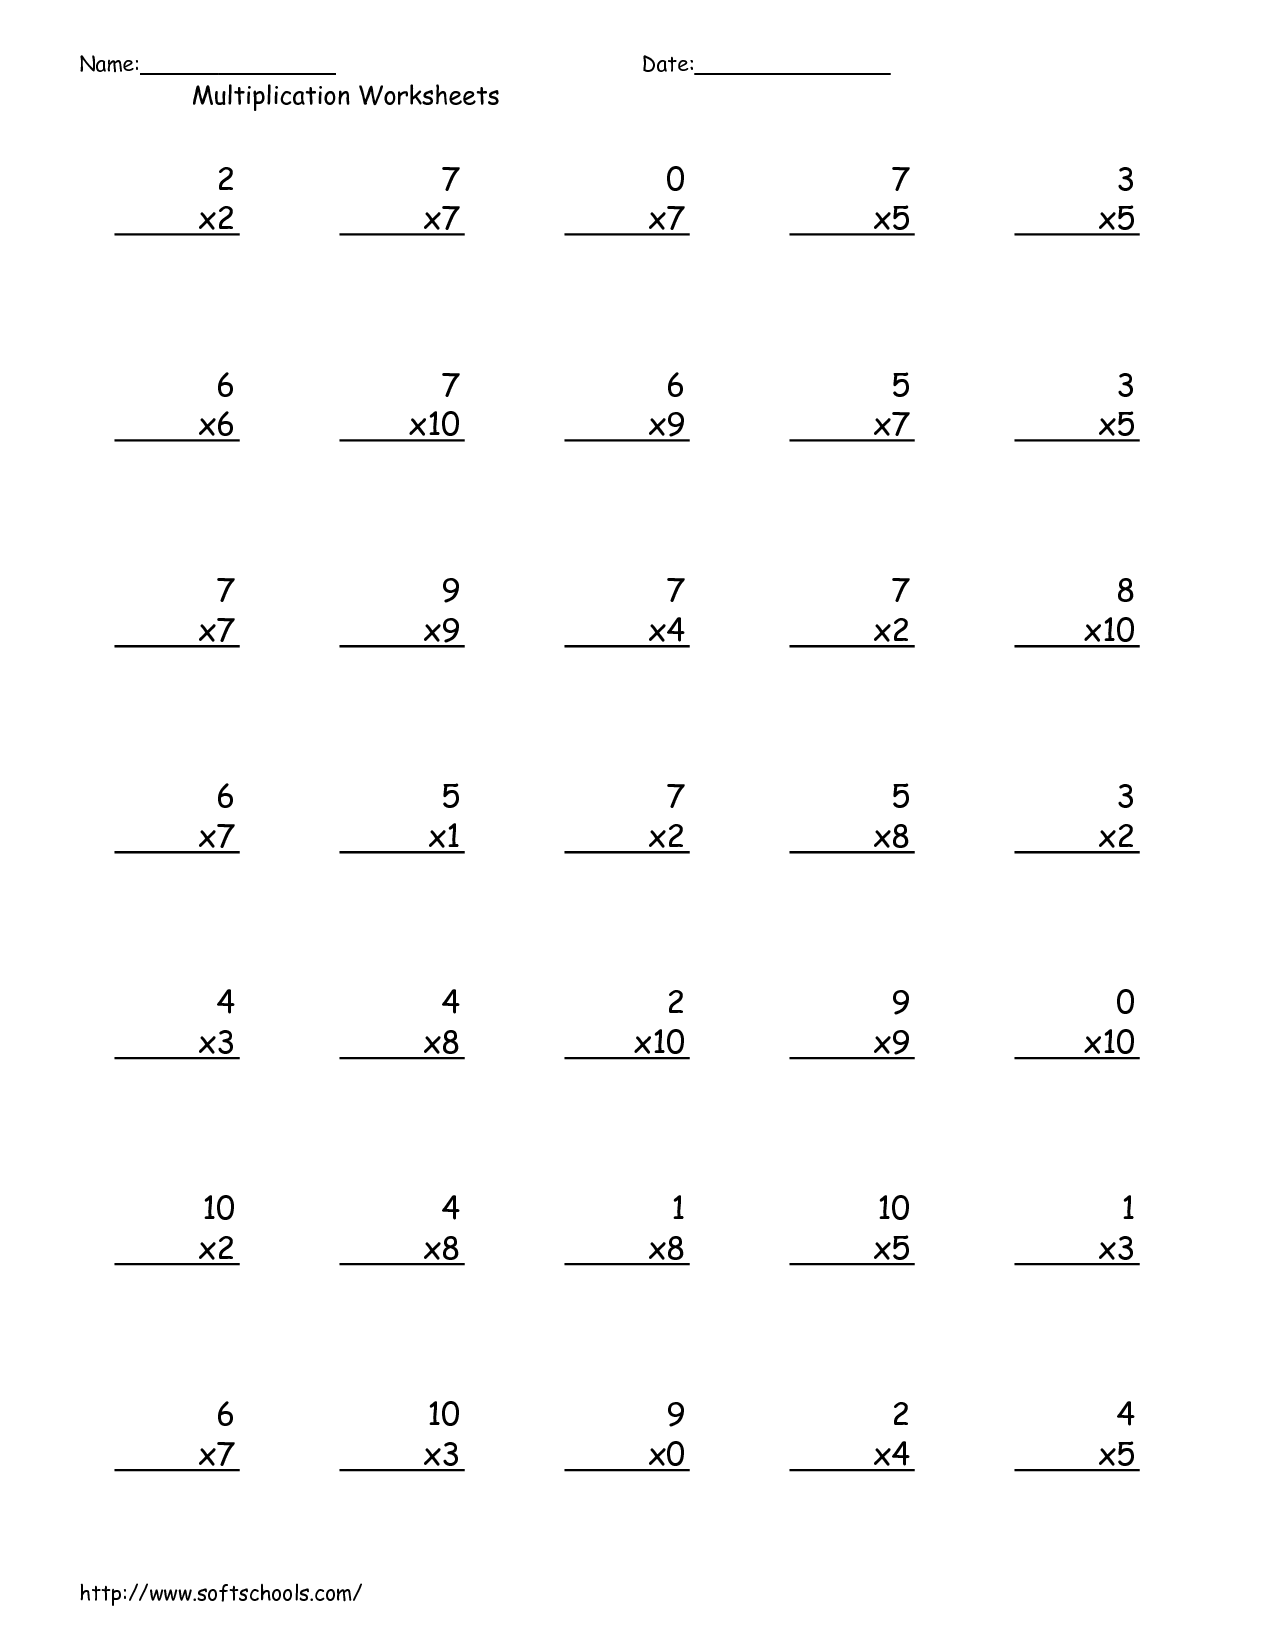 12 Best Images Of Multiplication Worksheets 1 11 100 Question 